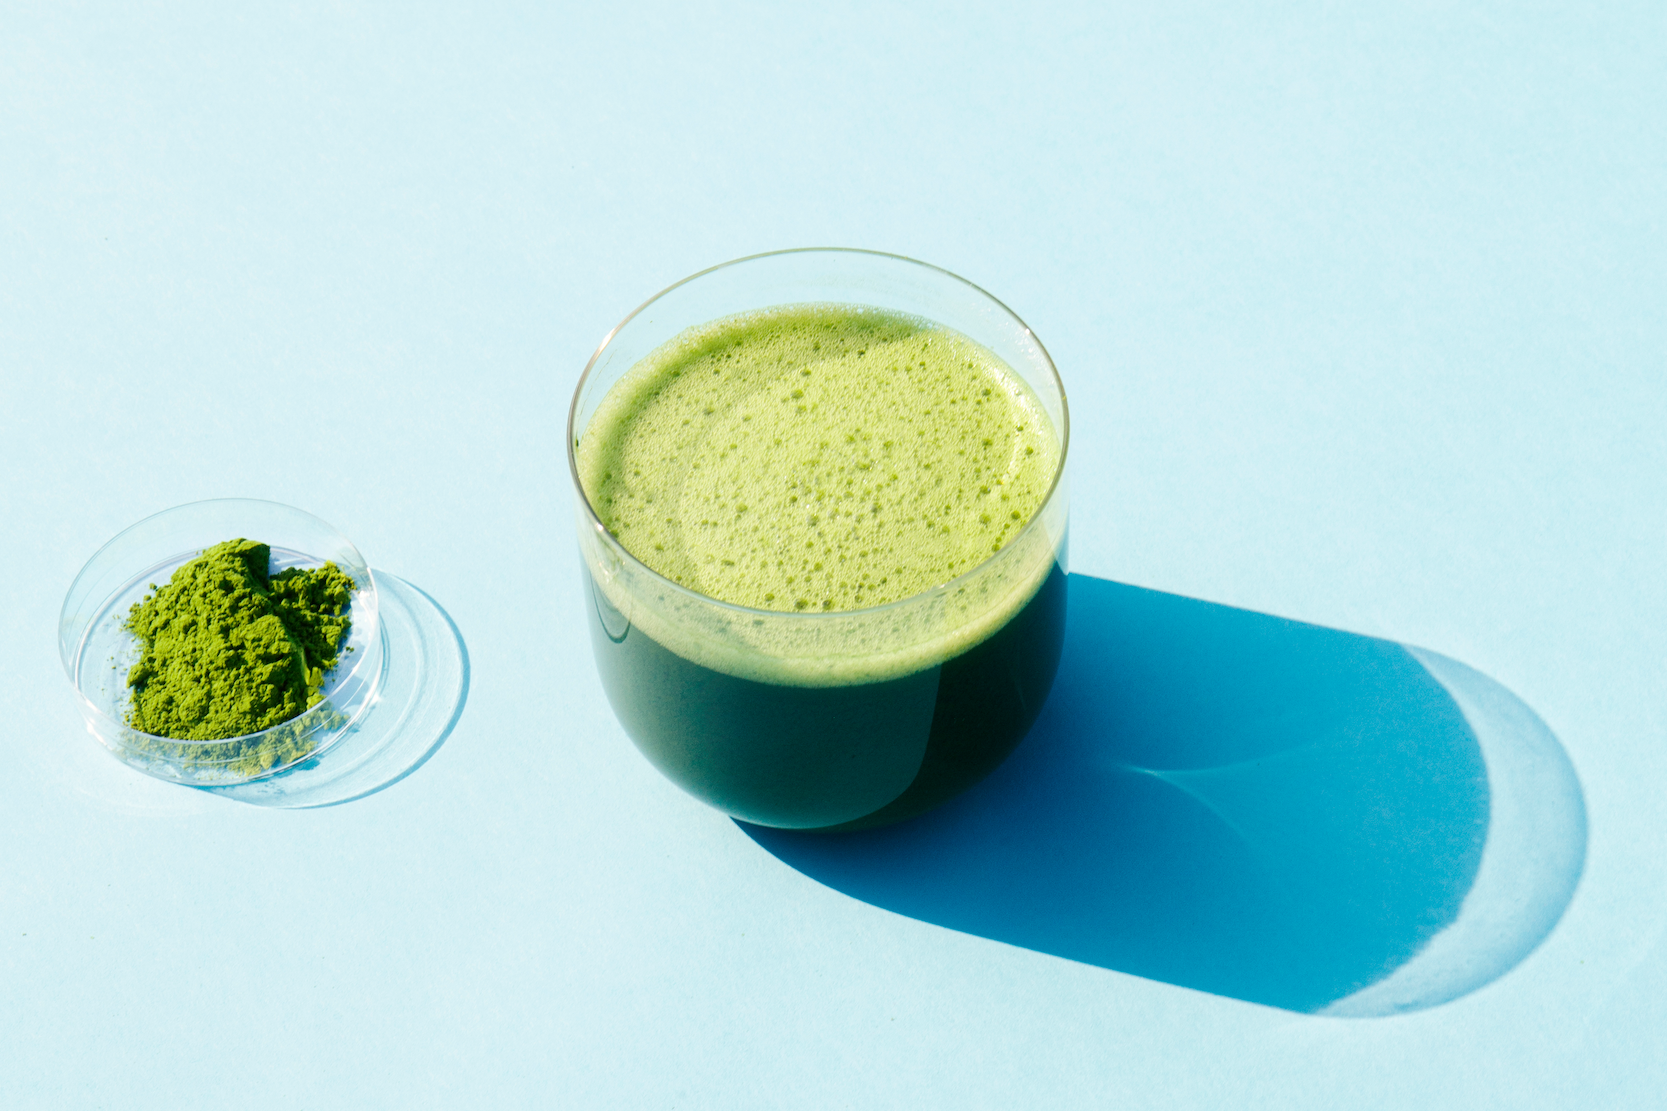 Green Tea Extract vs. Green Tea: Pros and Cons